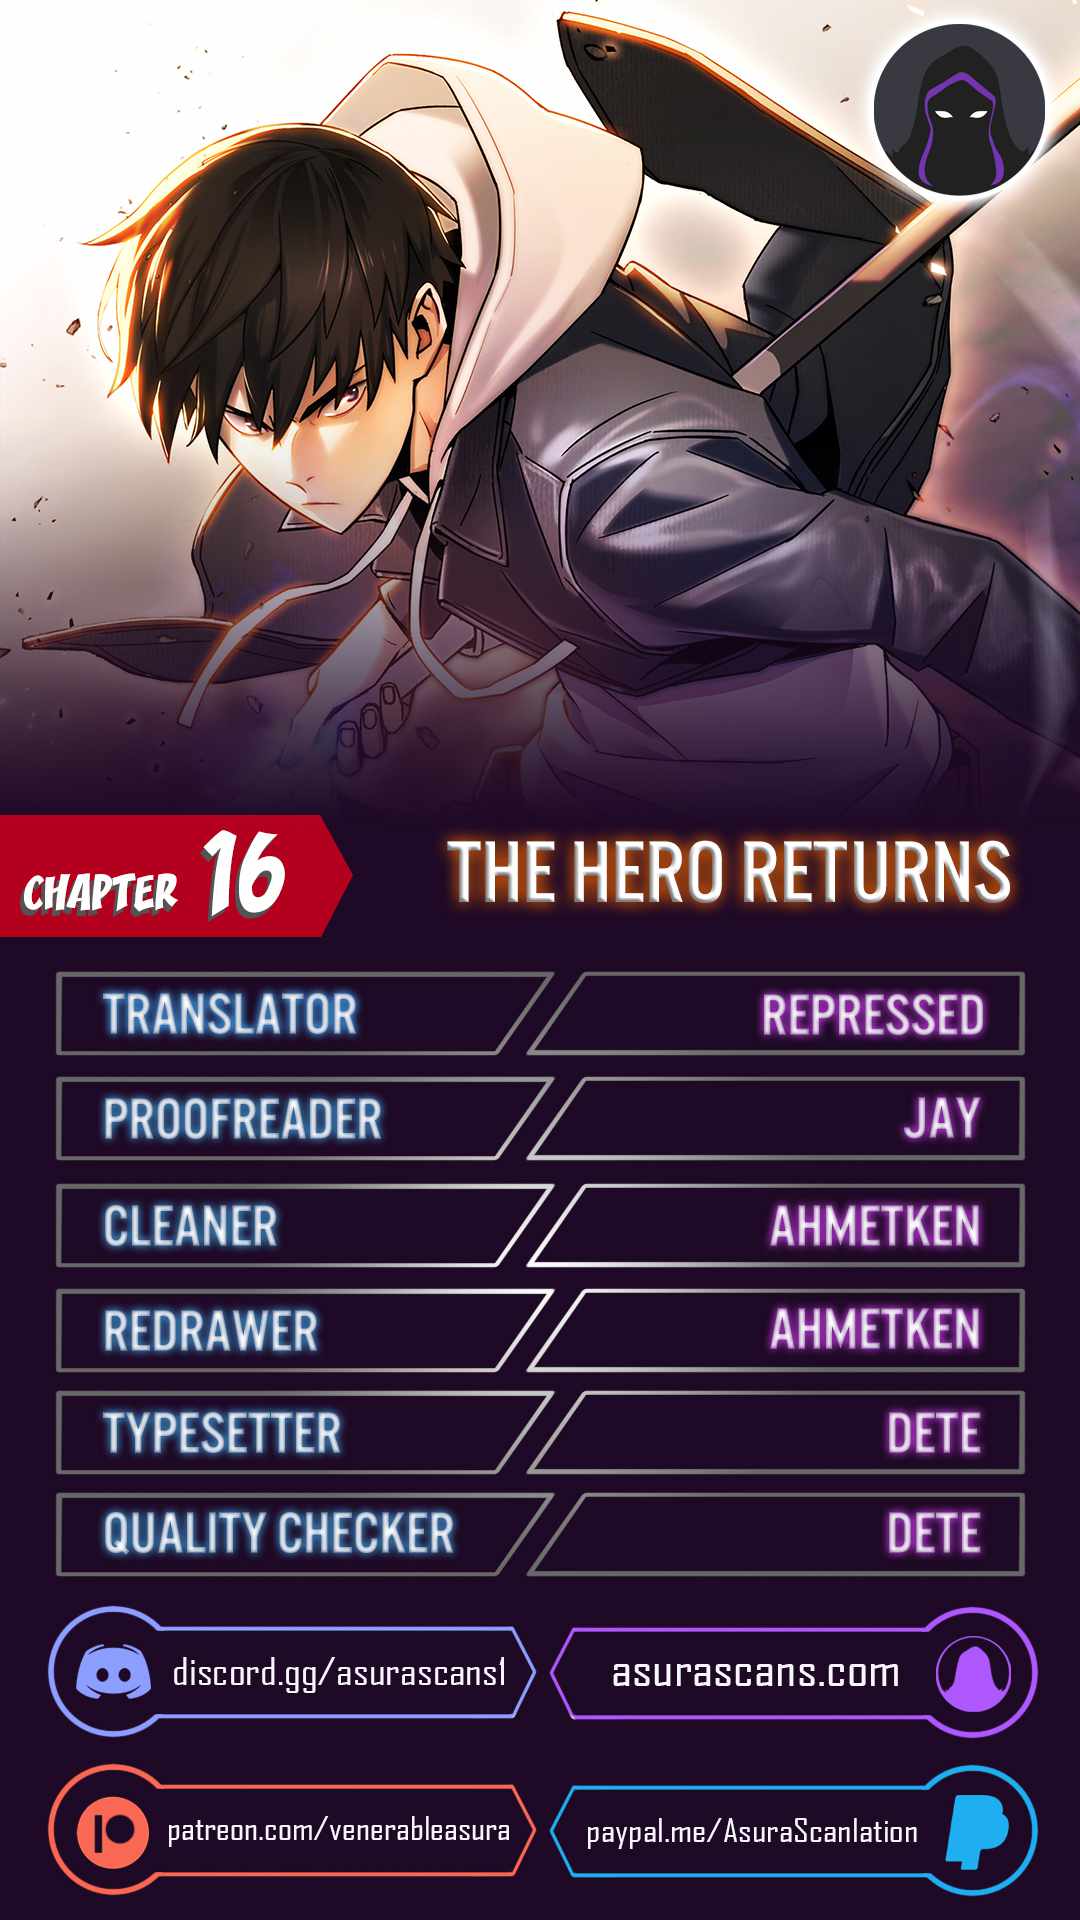 The Hero Returns chapter 16